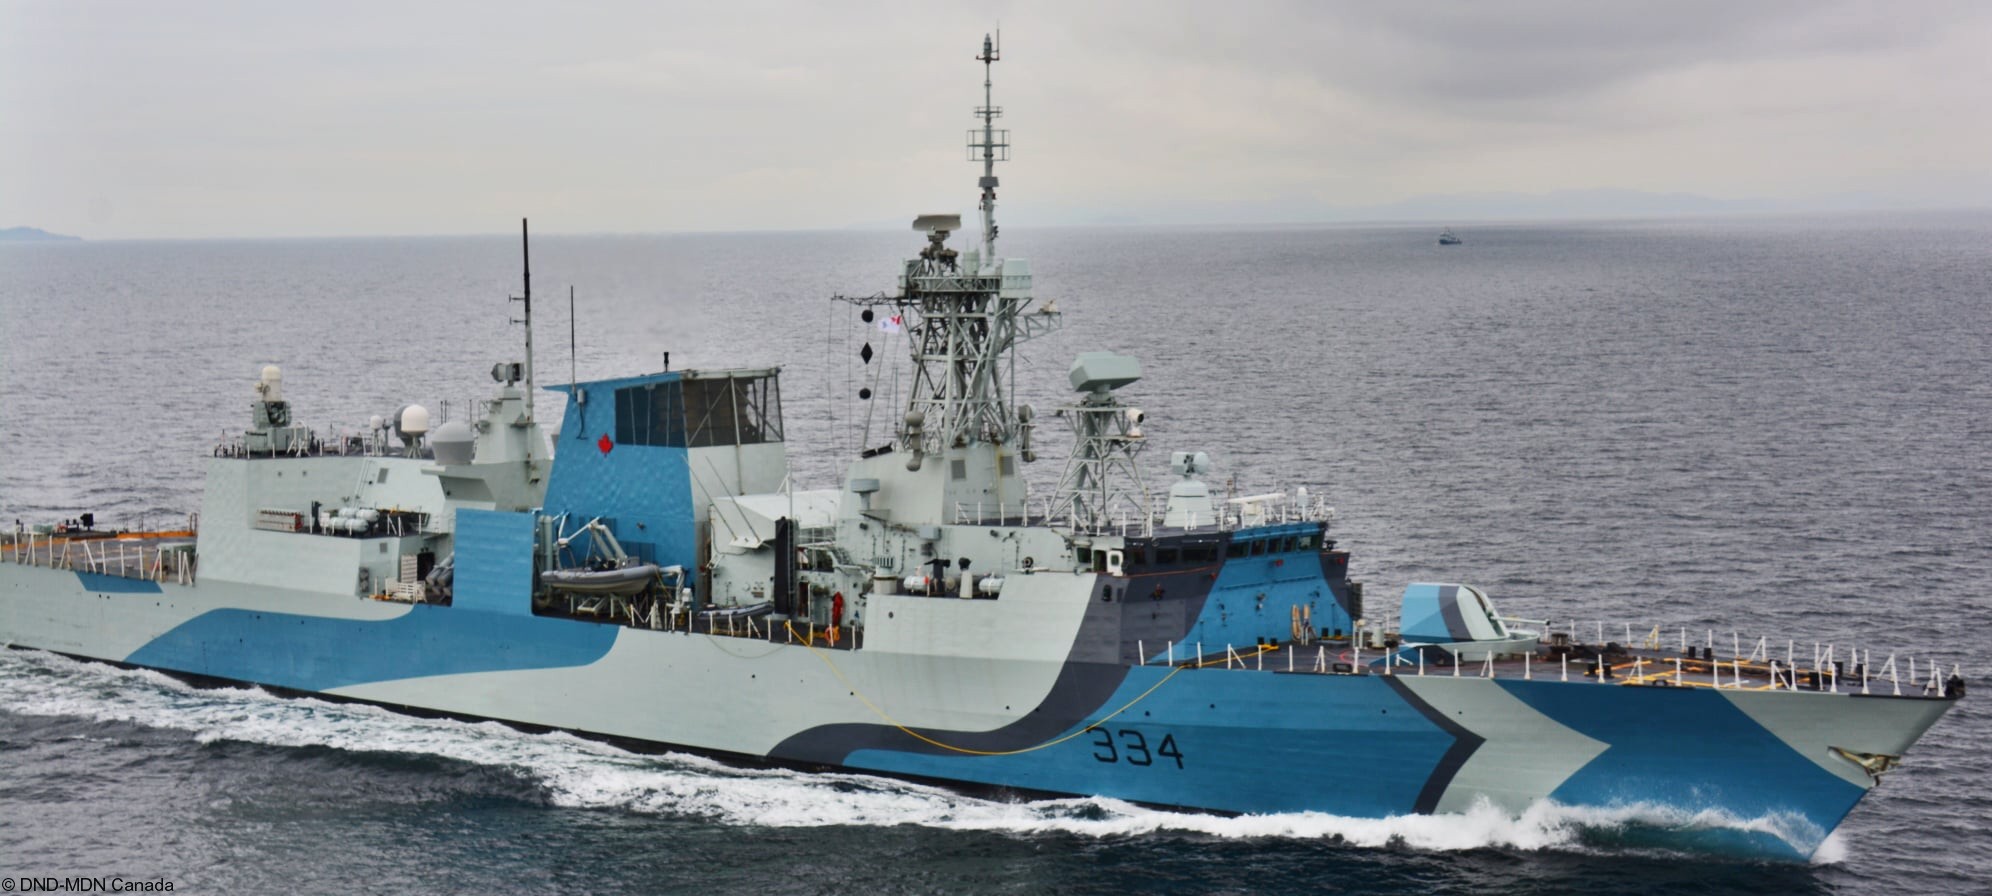 ffh-334 hmcs regina halifax class helicopter patrol frigate ncsm royal canadian navy 48